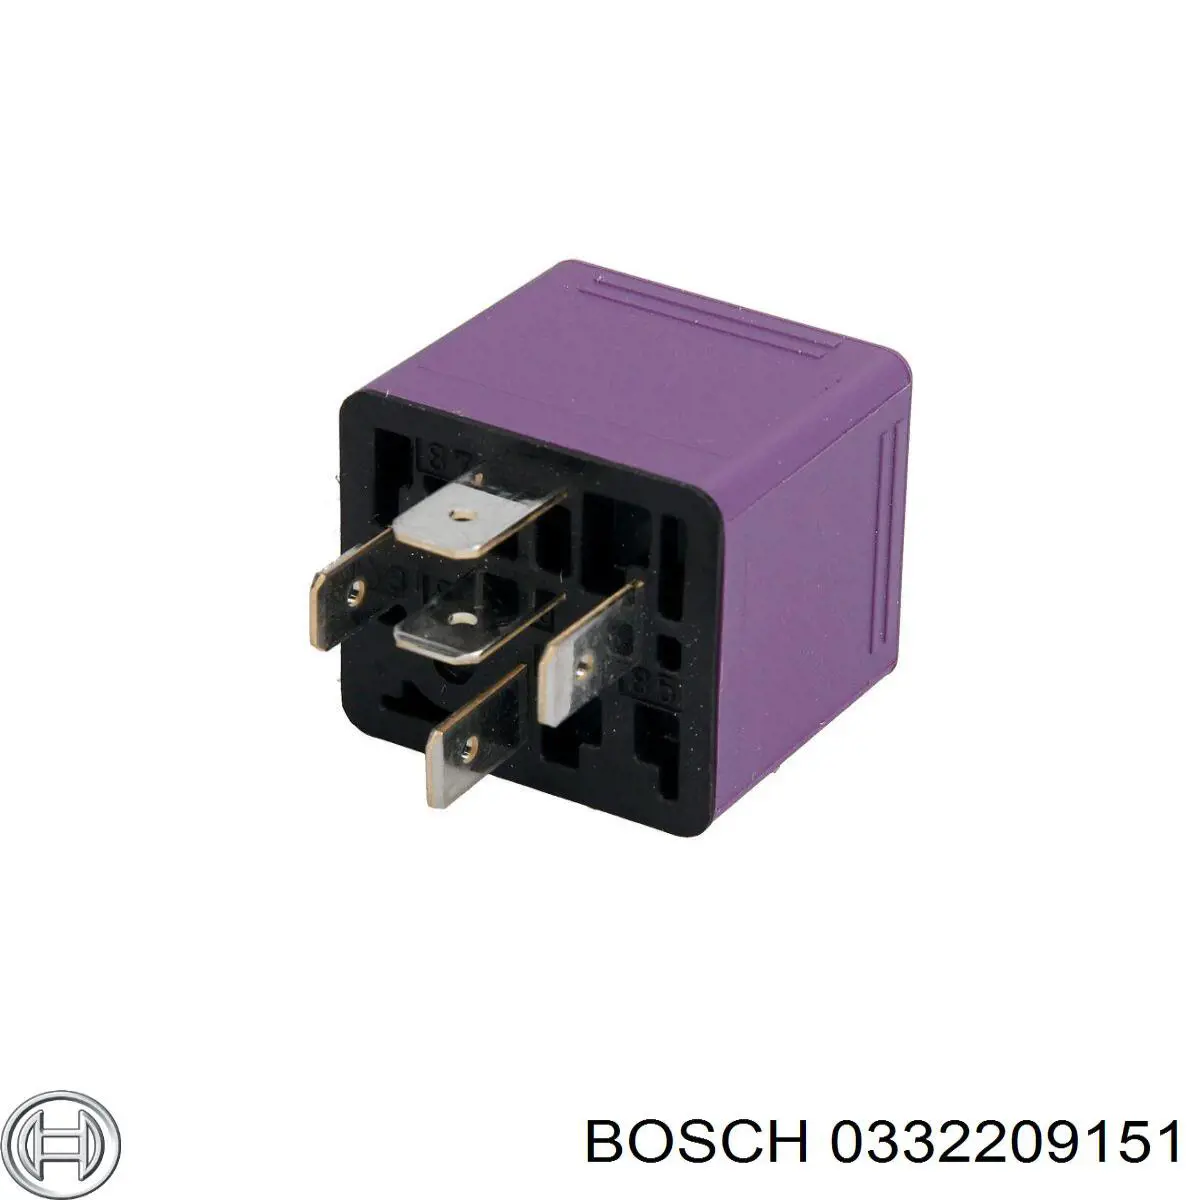 0332209151 Bosch relé eléctrico multifuncional